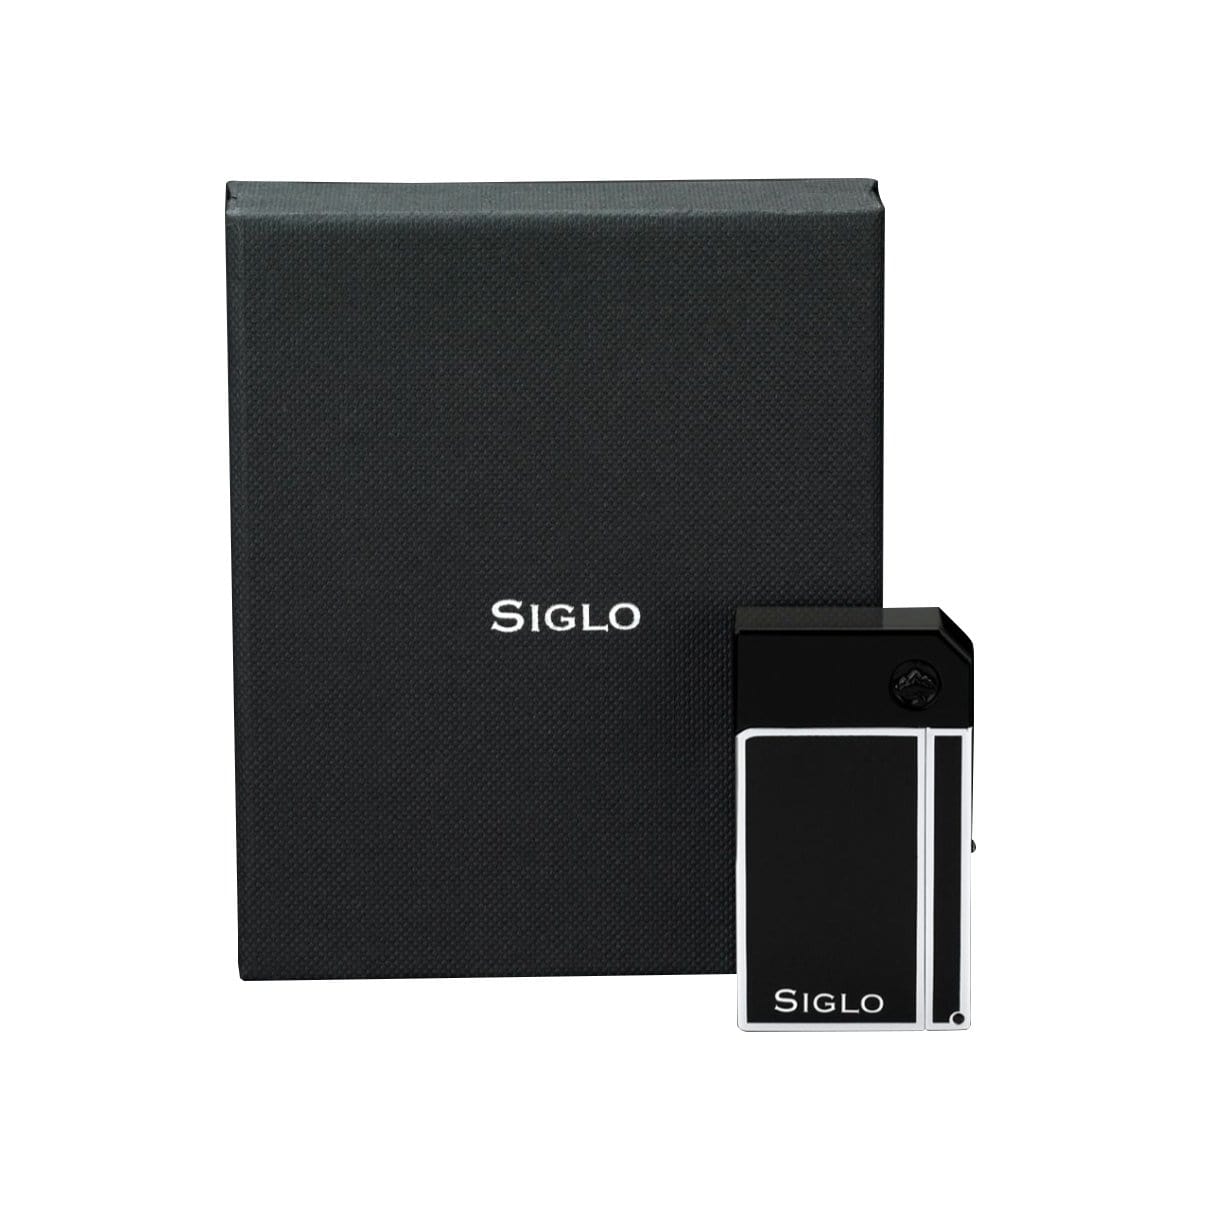 SIGLO ACCESSORIES SIGLO HIGH ALTITUDE OBSIDIAN BLACK